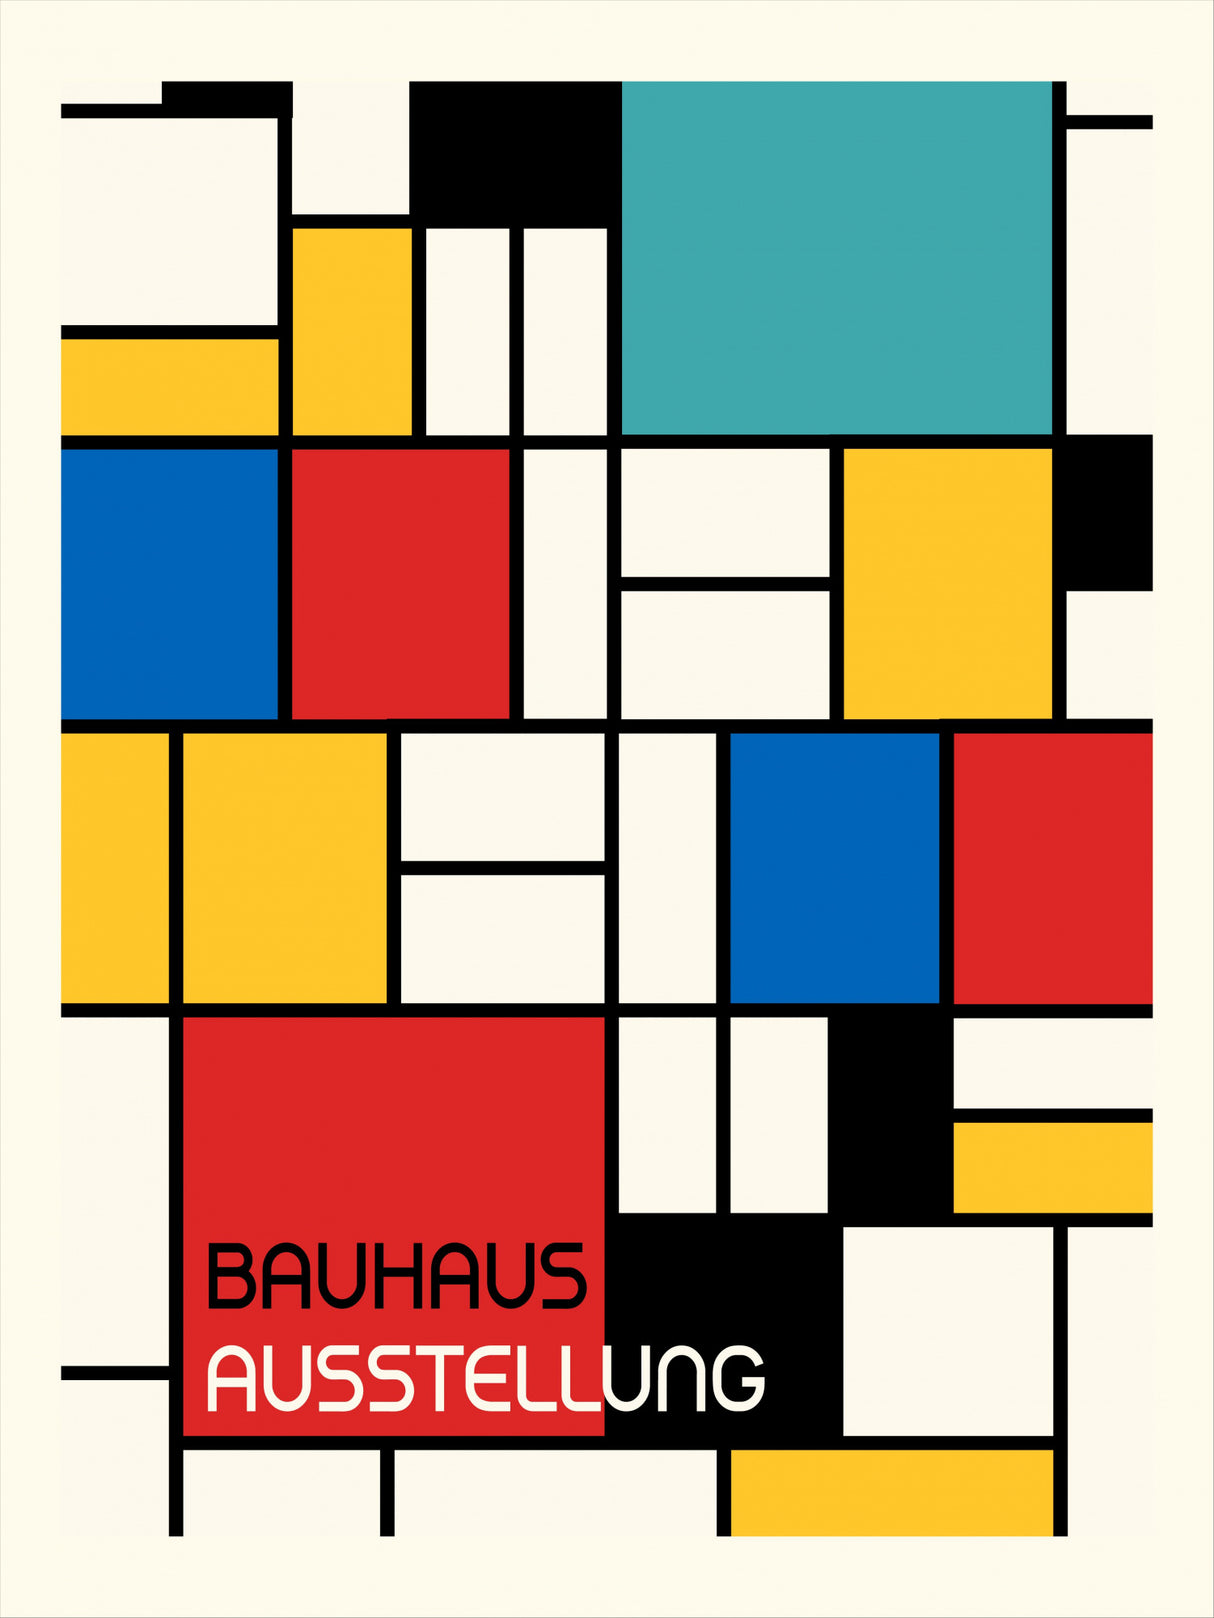 Bauhaus Geometric Design Retro Poster och Canvastavla